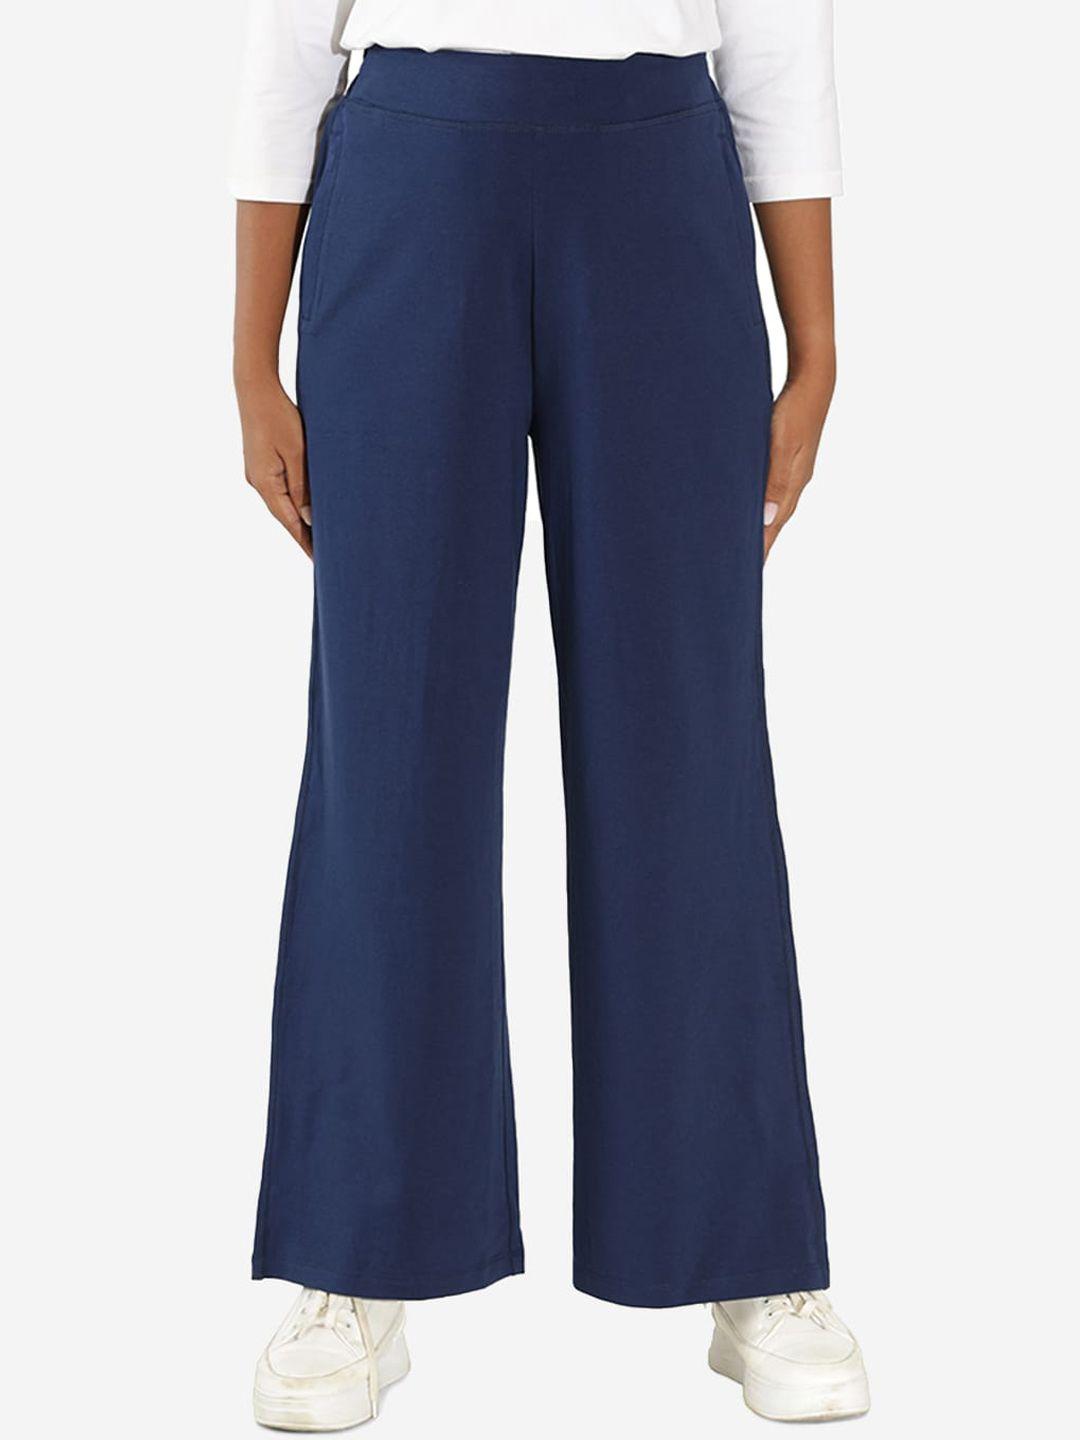 blissclub-women-navy-blue-peg-leg-loose-fit-high-rise-wrinkle-free-trousers